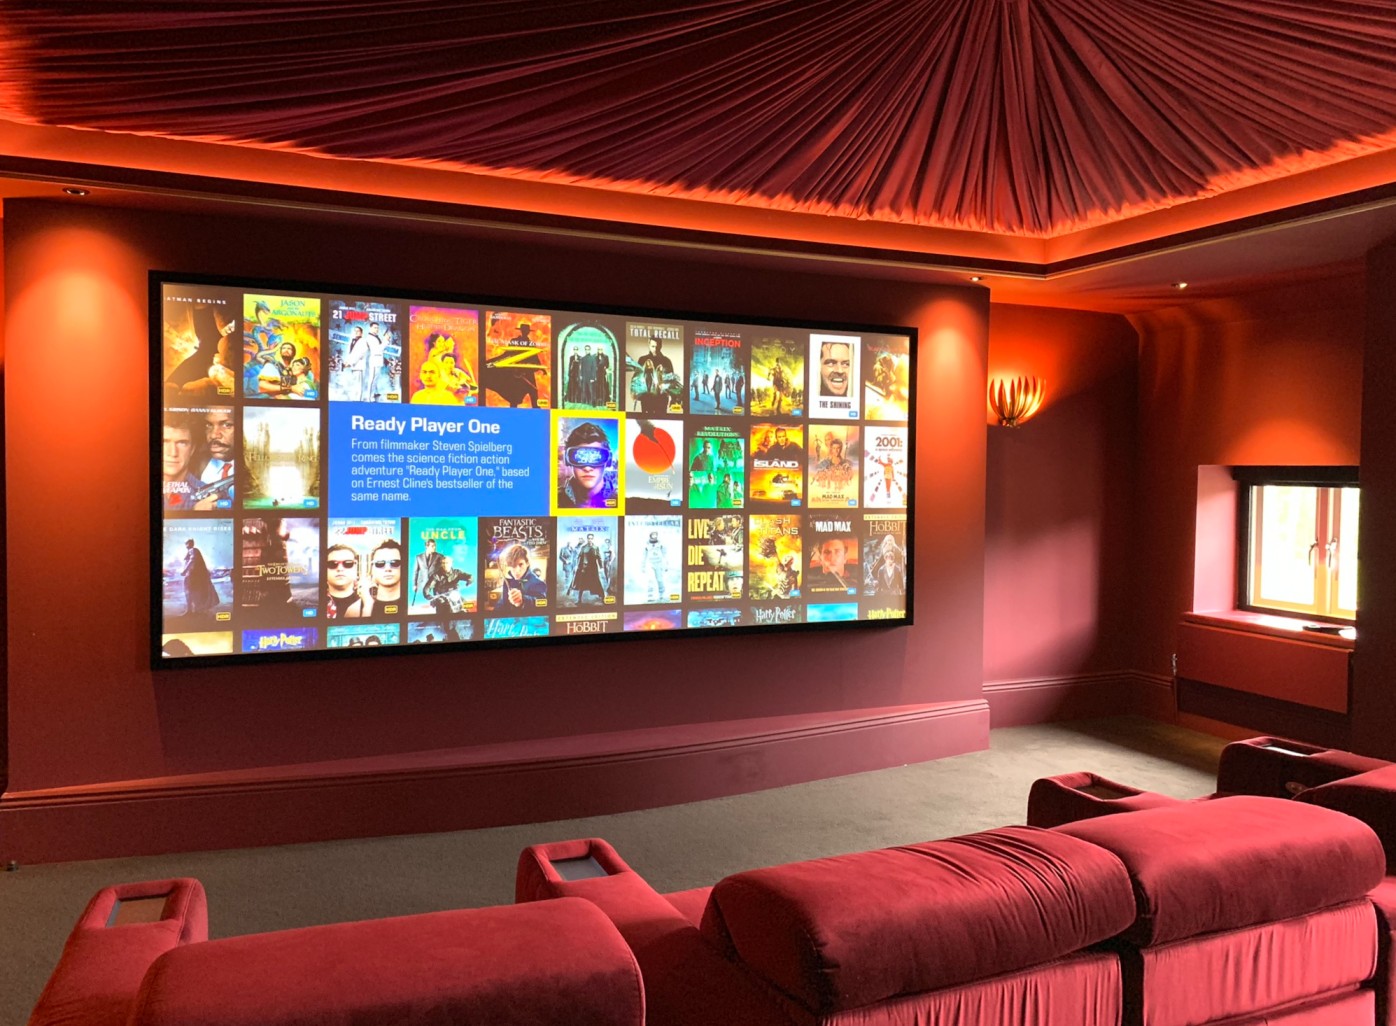 Cinema room showcasing projector screen, lighting, and cinema chairs